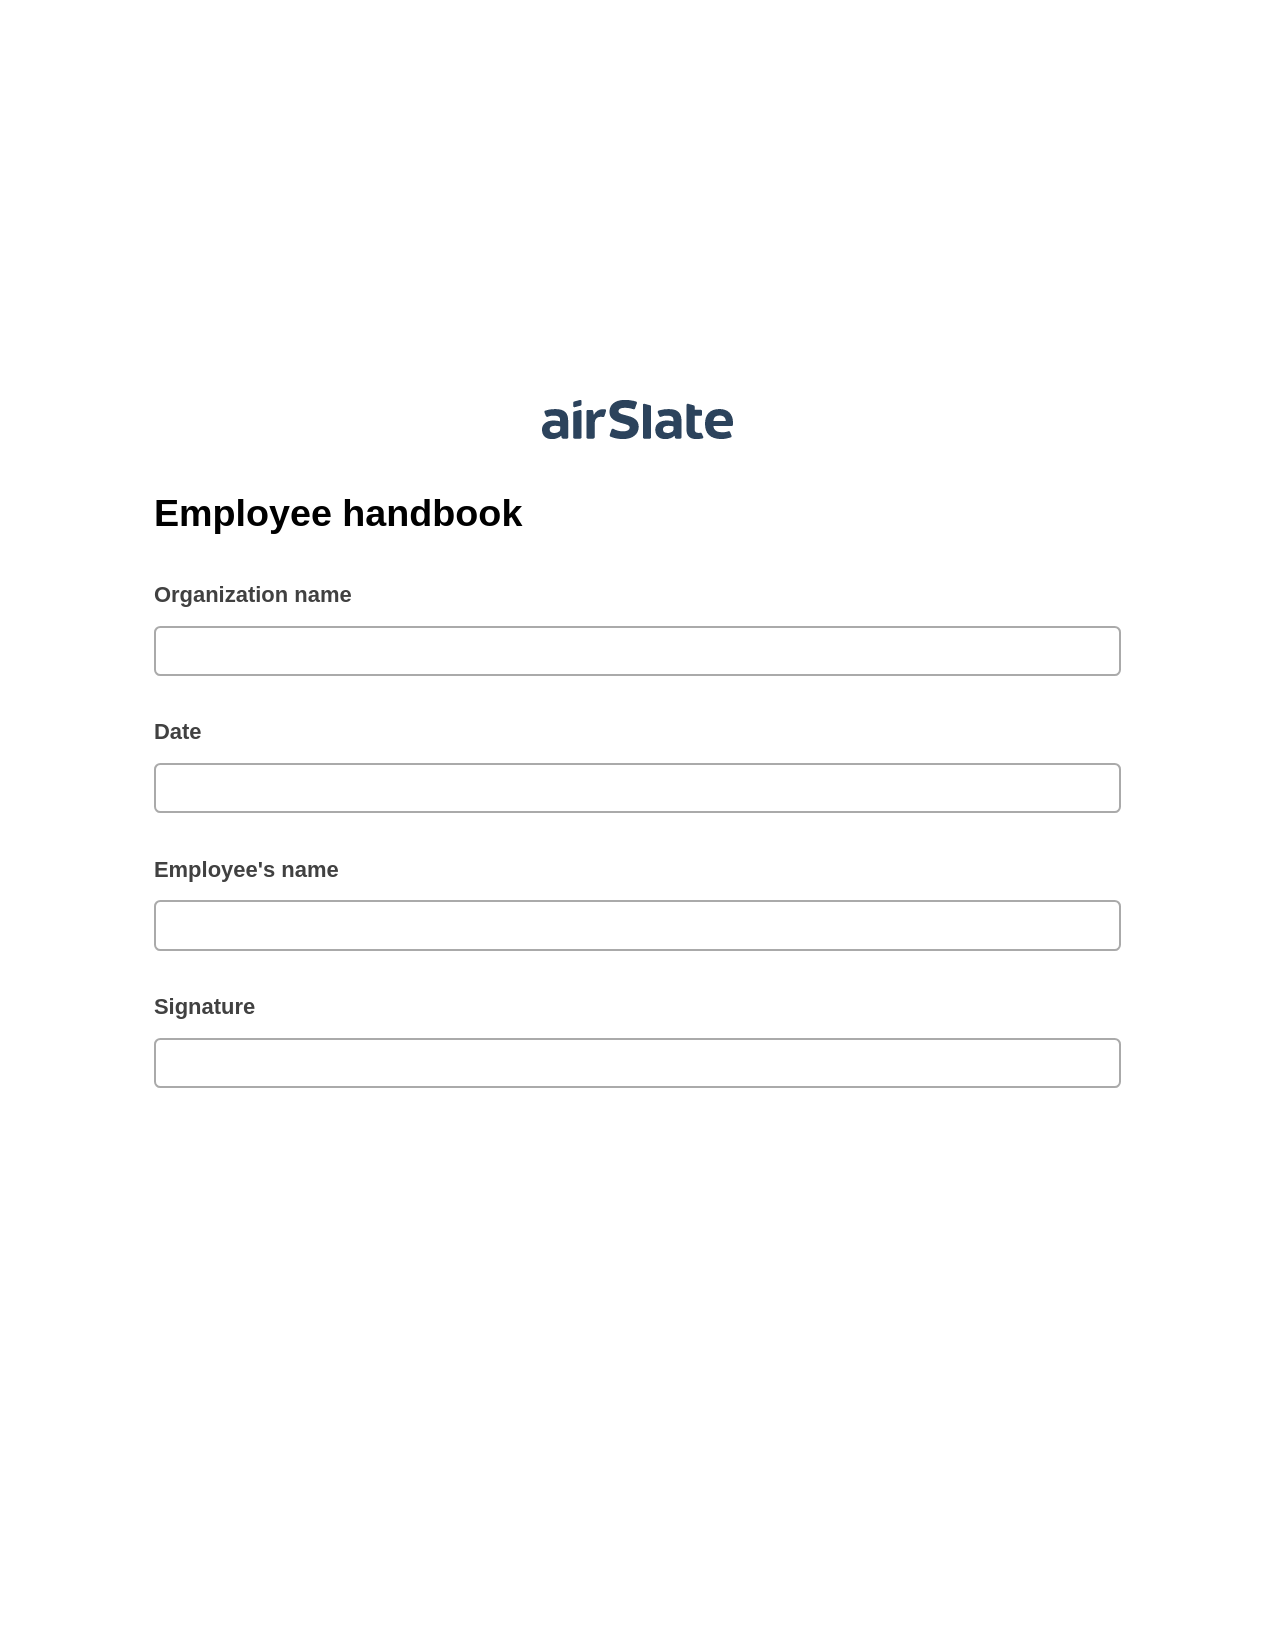 Multirole Employee handbook Pre-fill from Excel Spreadsheet Bot, Pre-fill with Custom Data Bot, OneDrive Bot